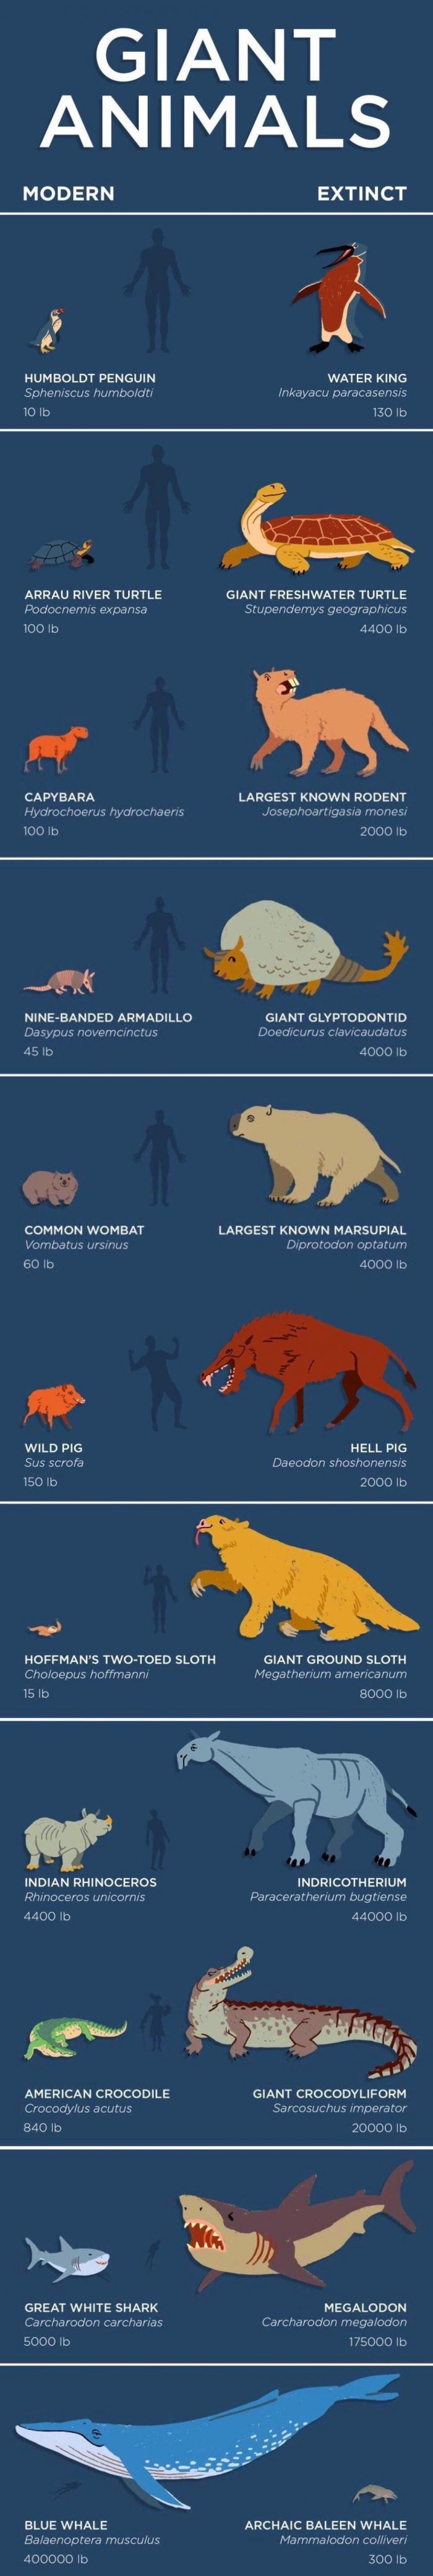 giant animals modern and extinct